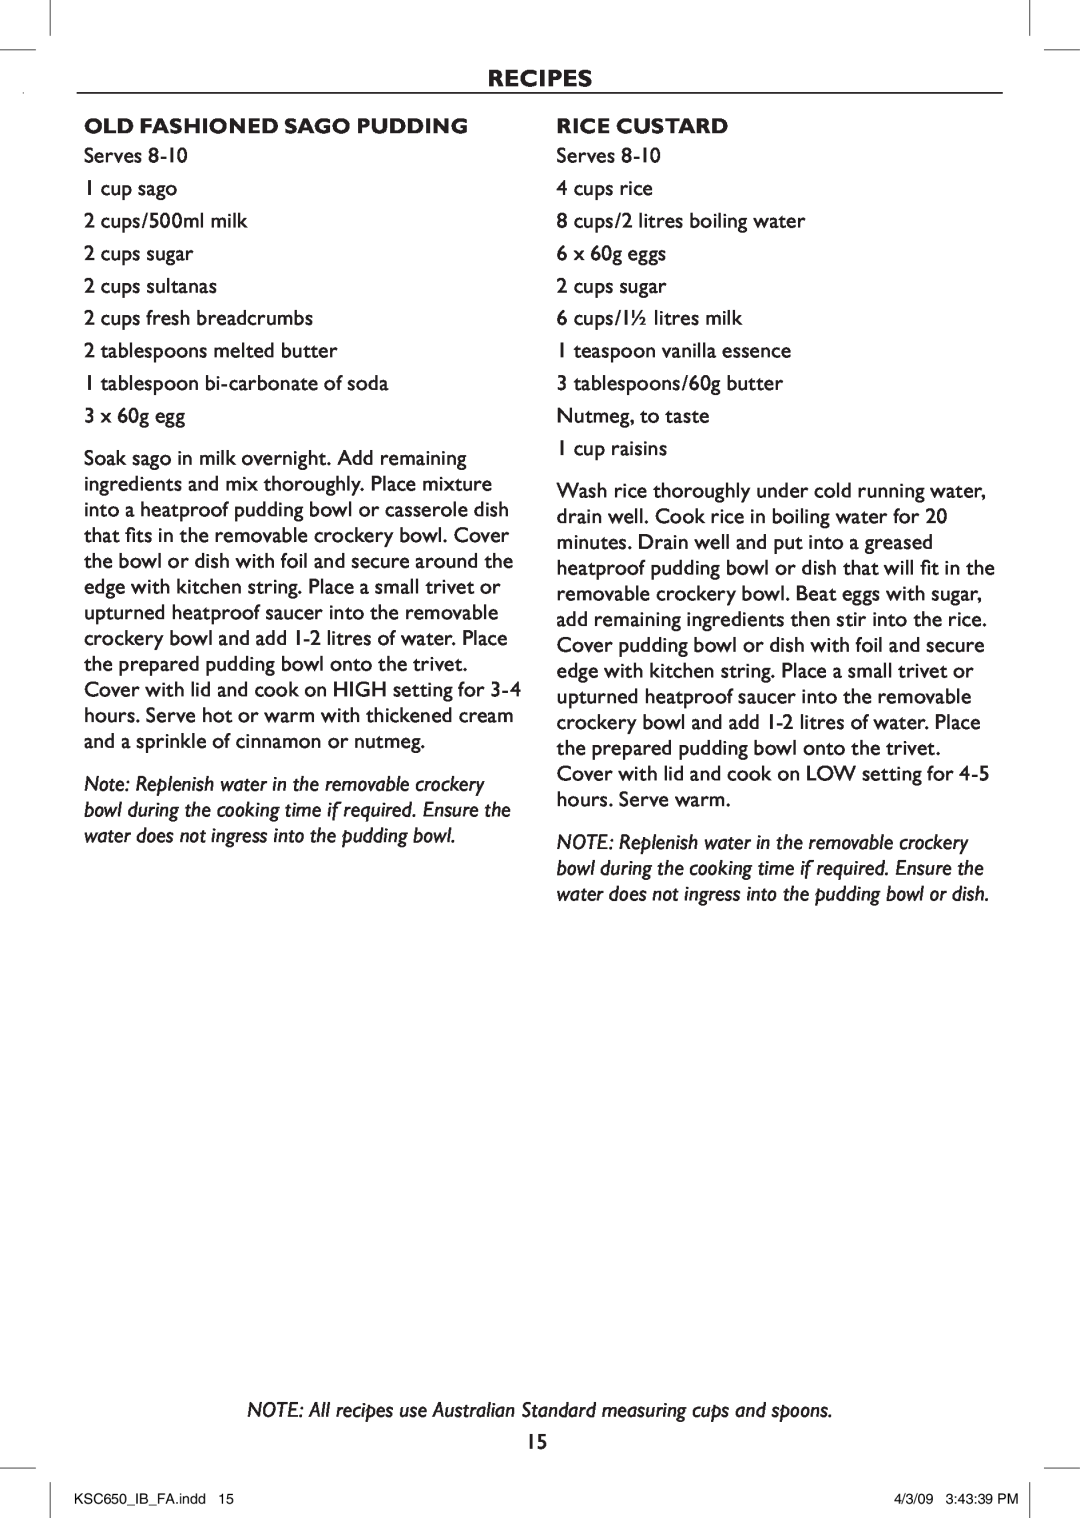 Kambrook KSC650 manual Recipes, Old Fashioned Sago Pudding, Rice Custard 